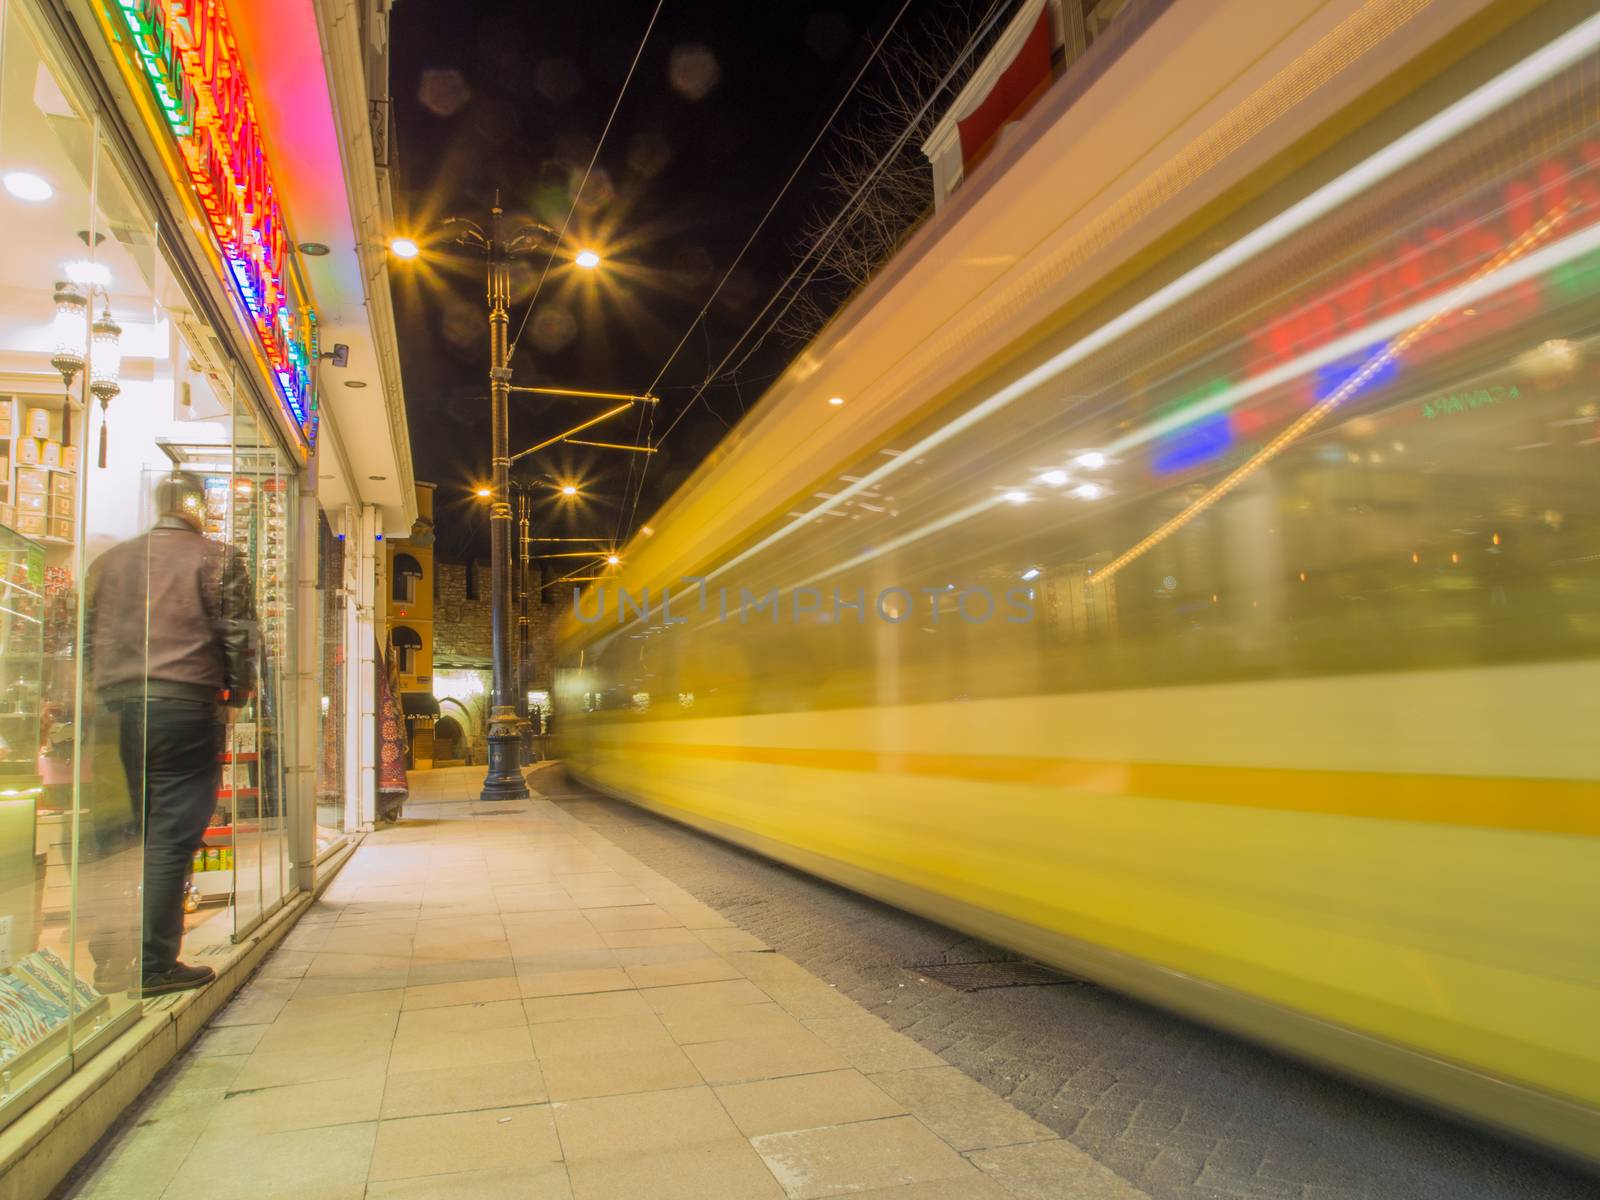 Commuter passenger tram moving down street with motion blur effect.